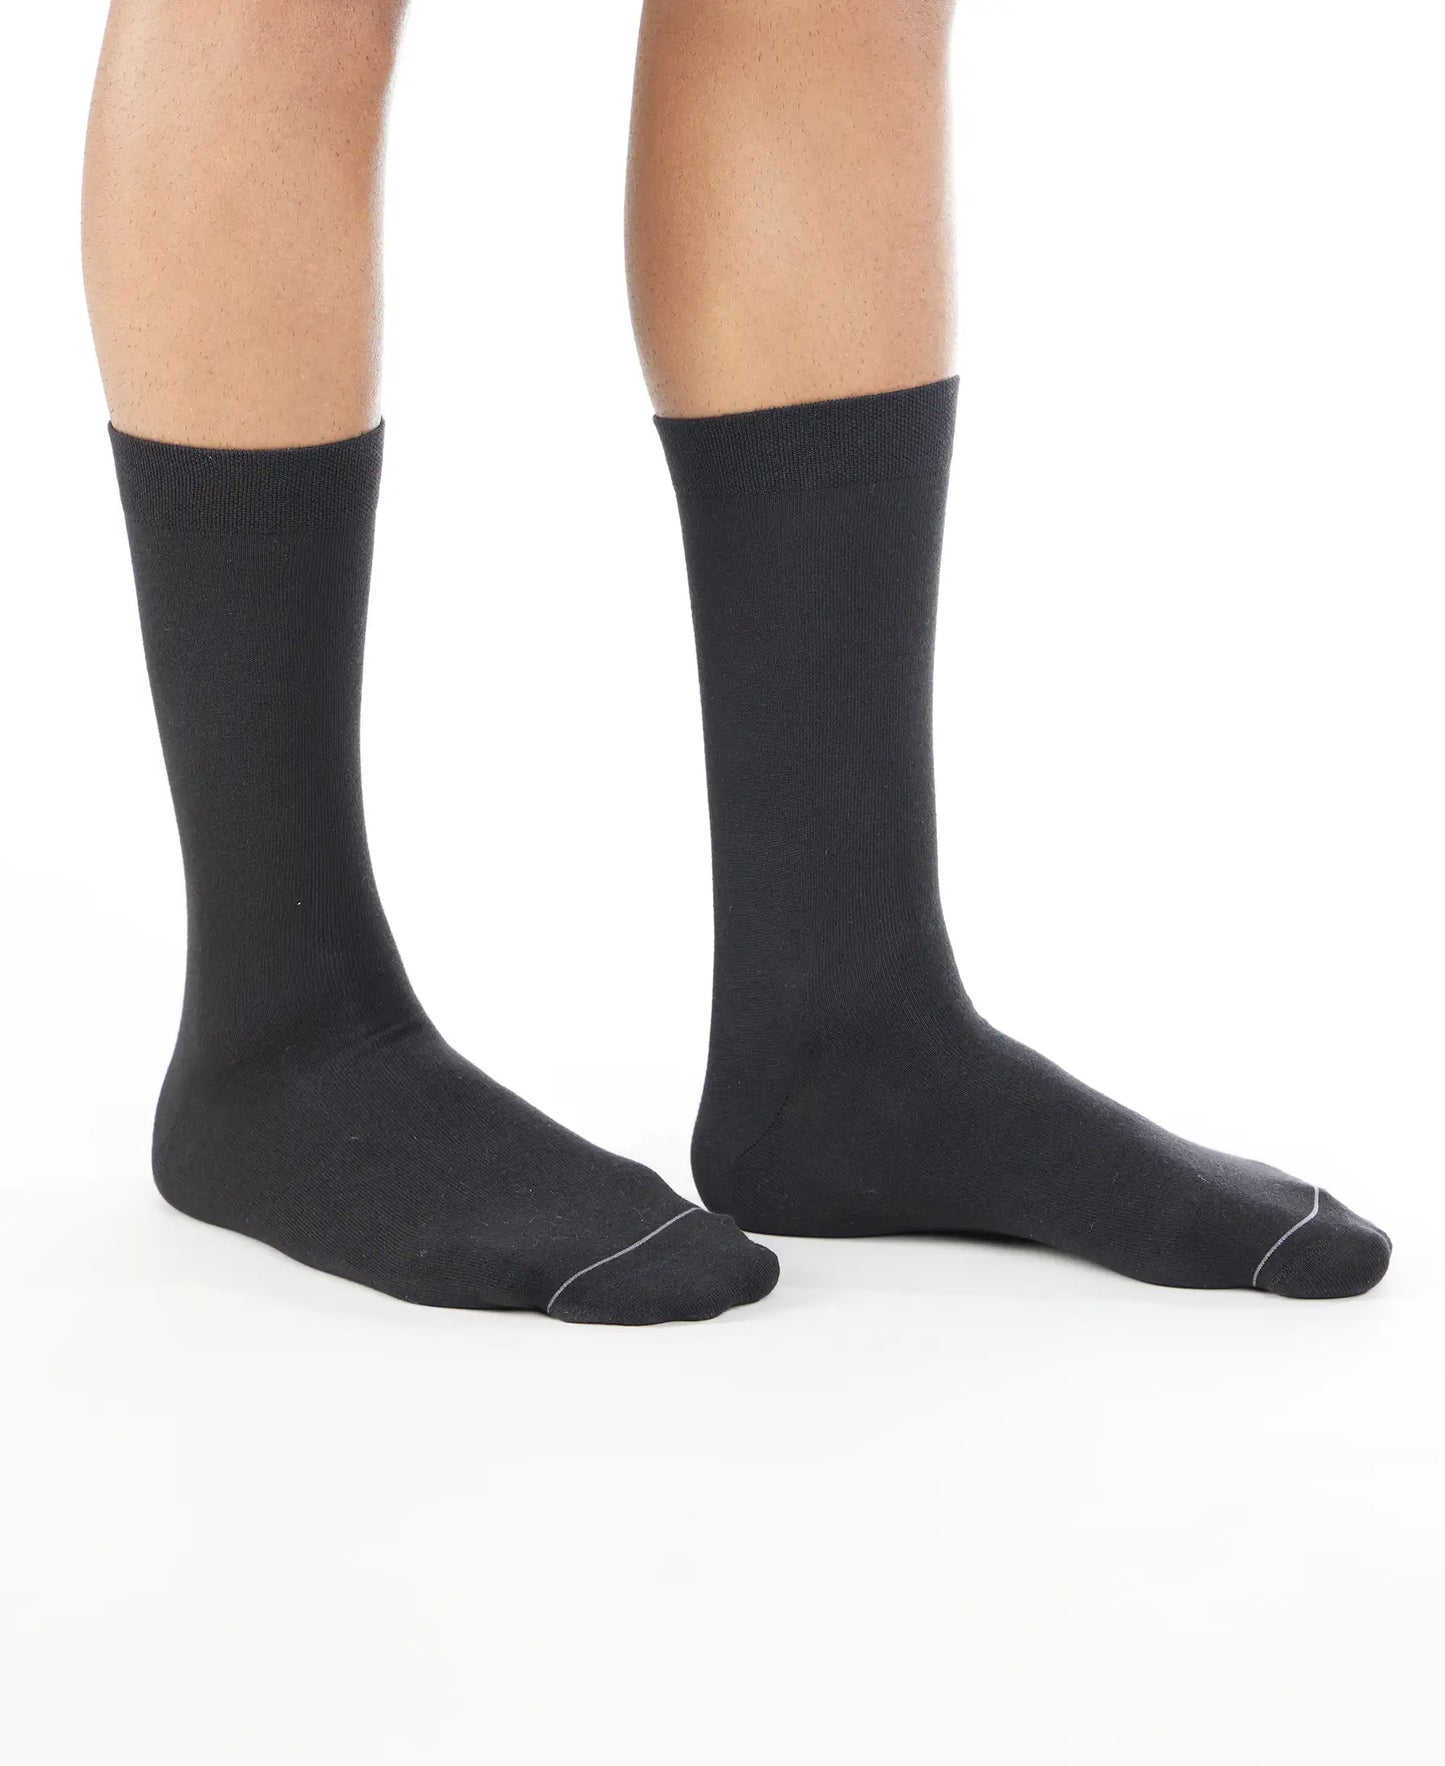 Modal Cotton Crew Length Socks with StayFresh Treatment - Black-3